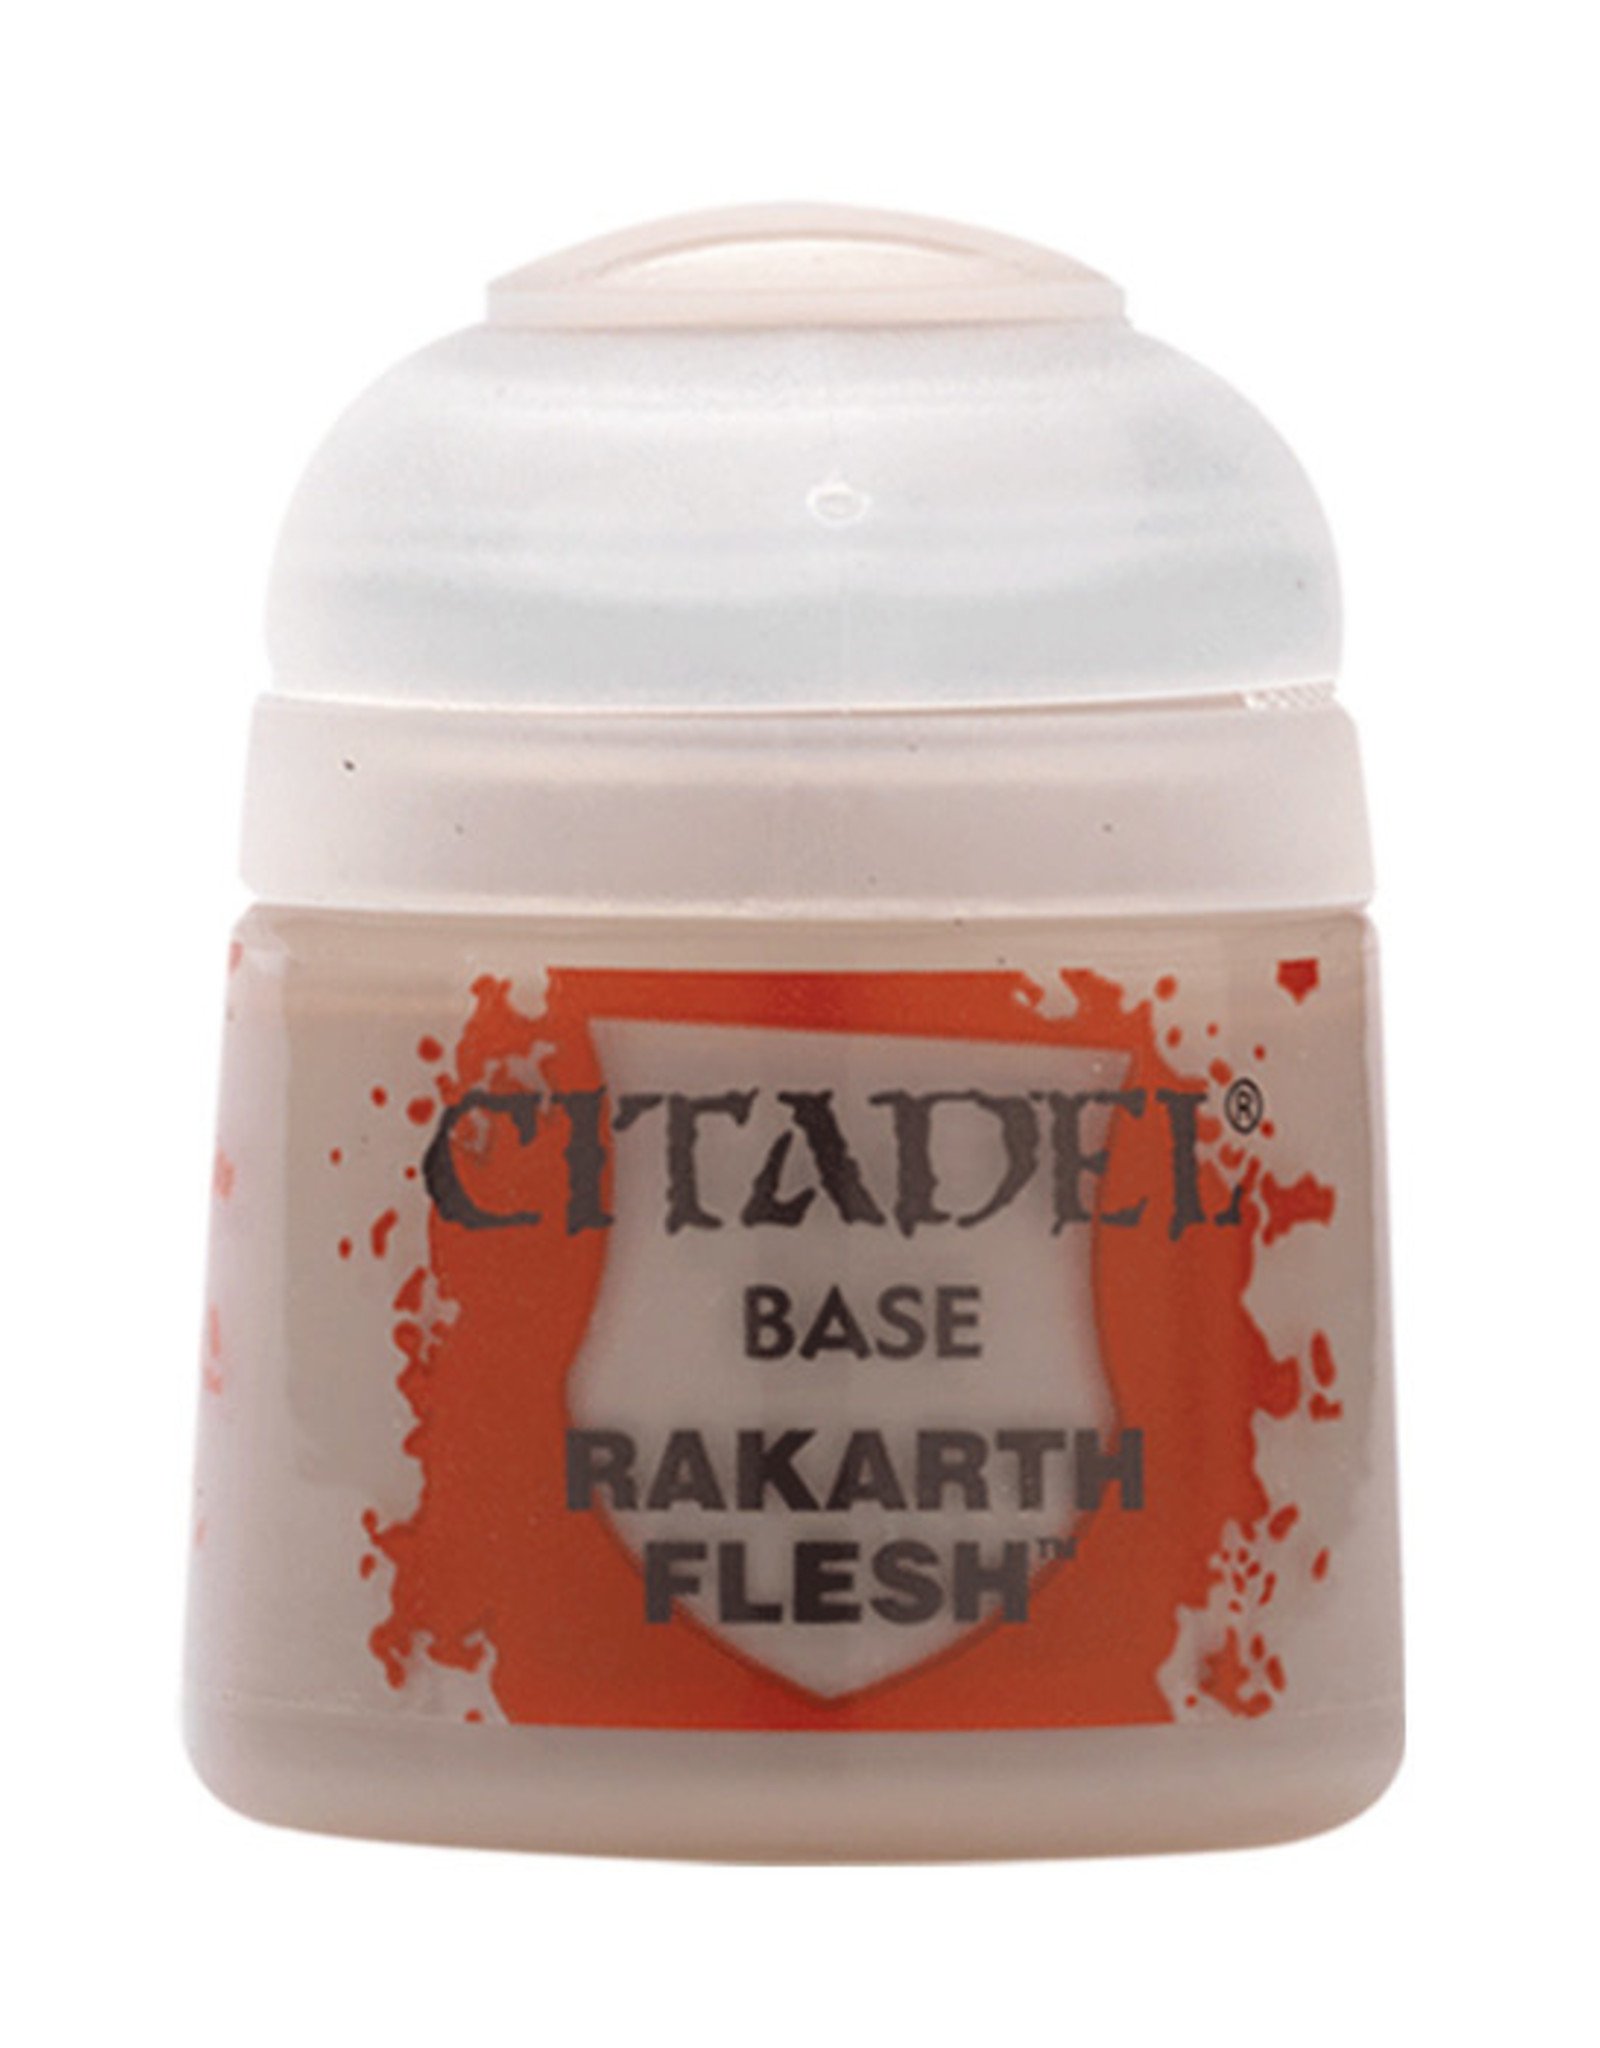 Citadel Citadel Colour: Base - Rakarth Flesh